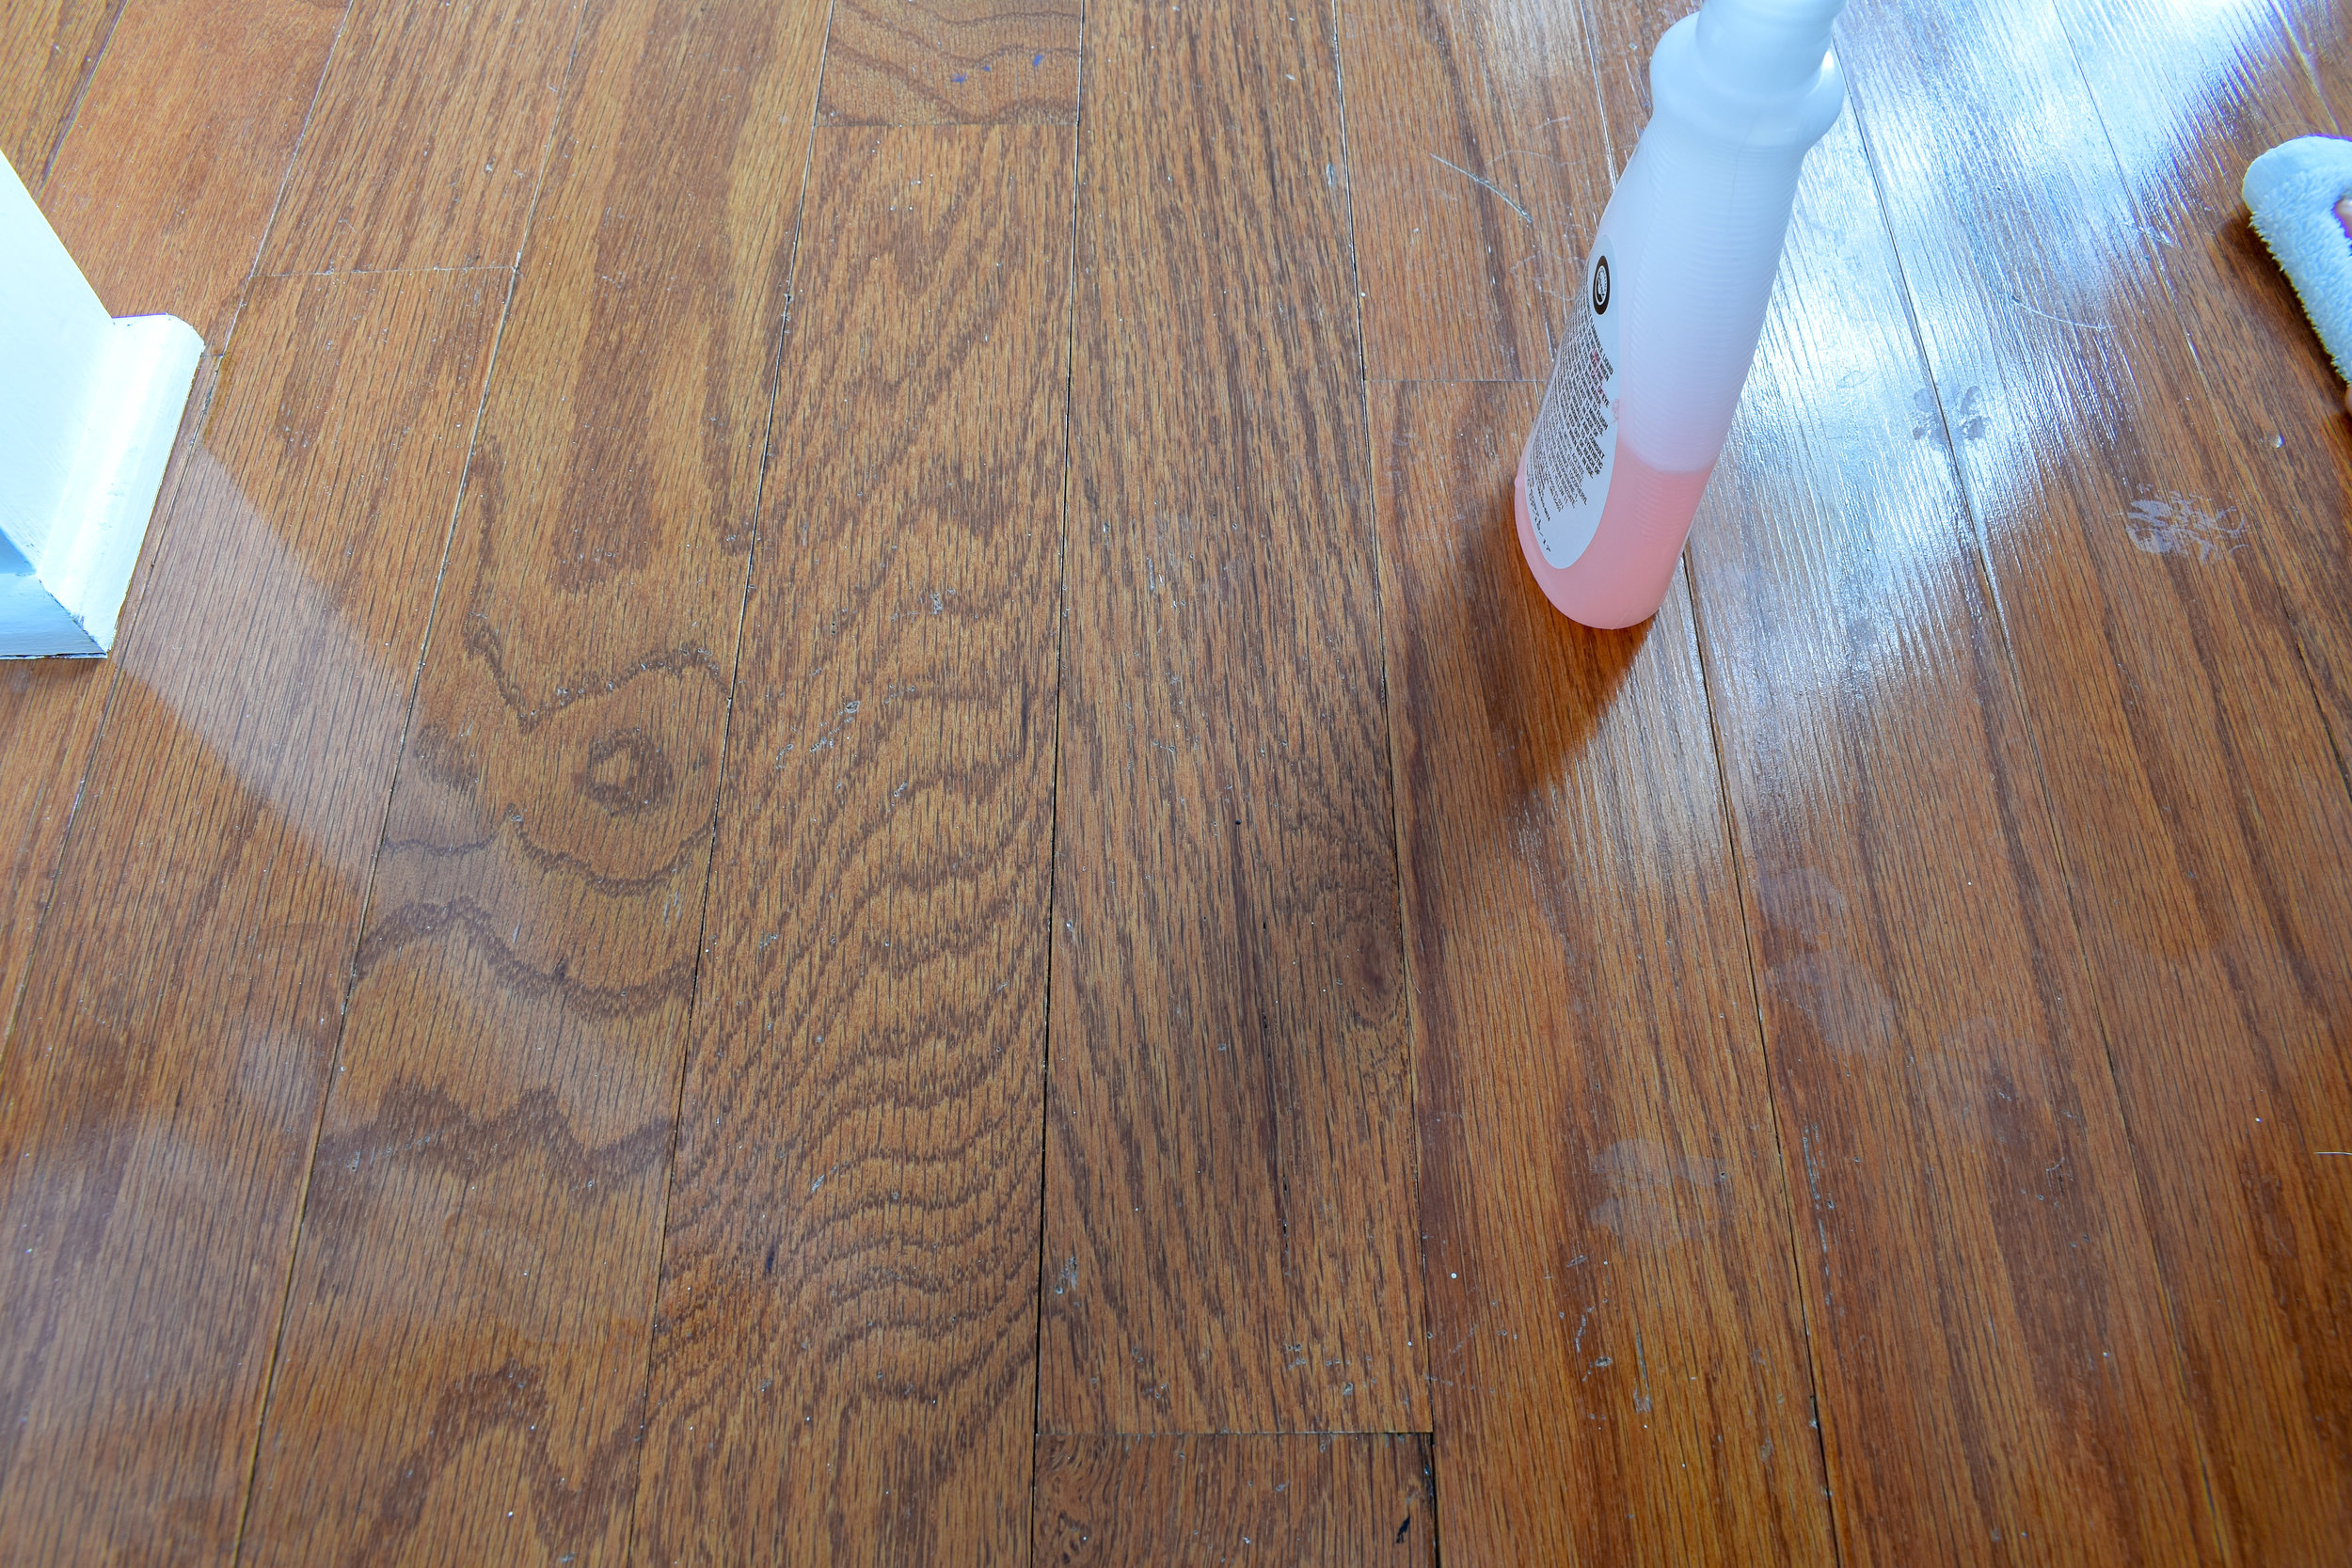 How To Make Old Hardwood Floors Shine